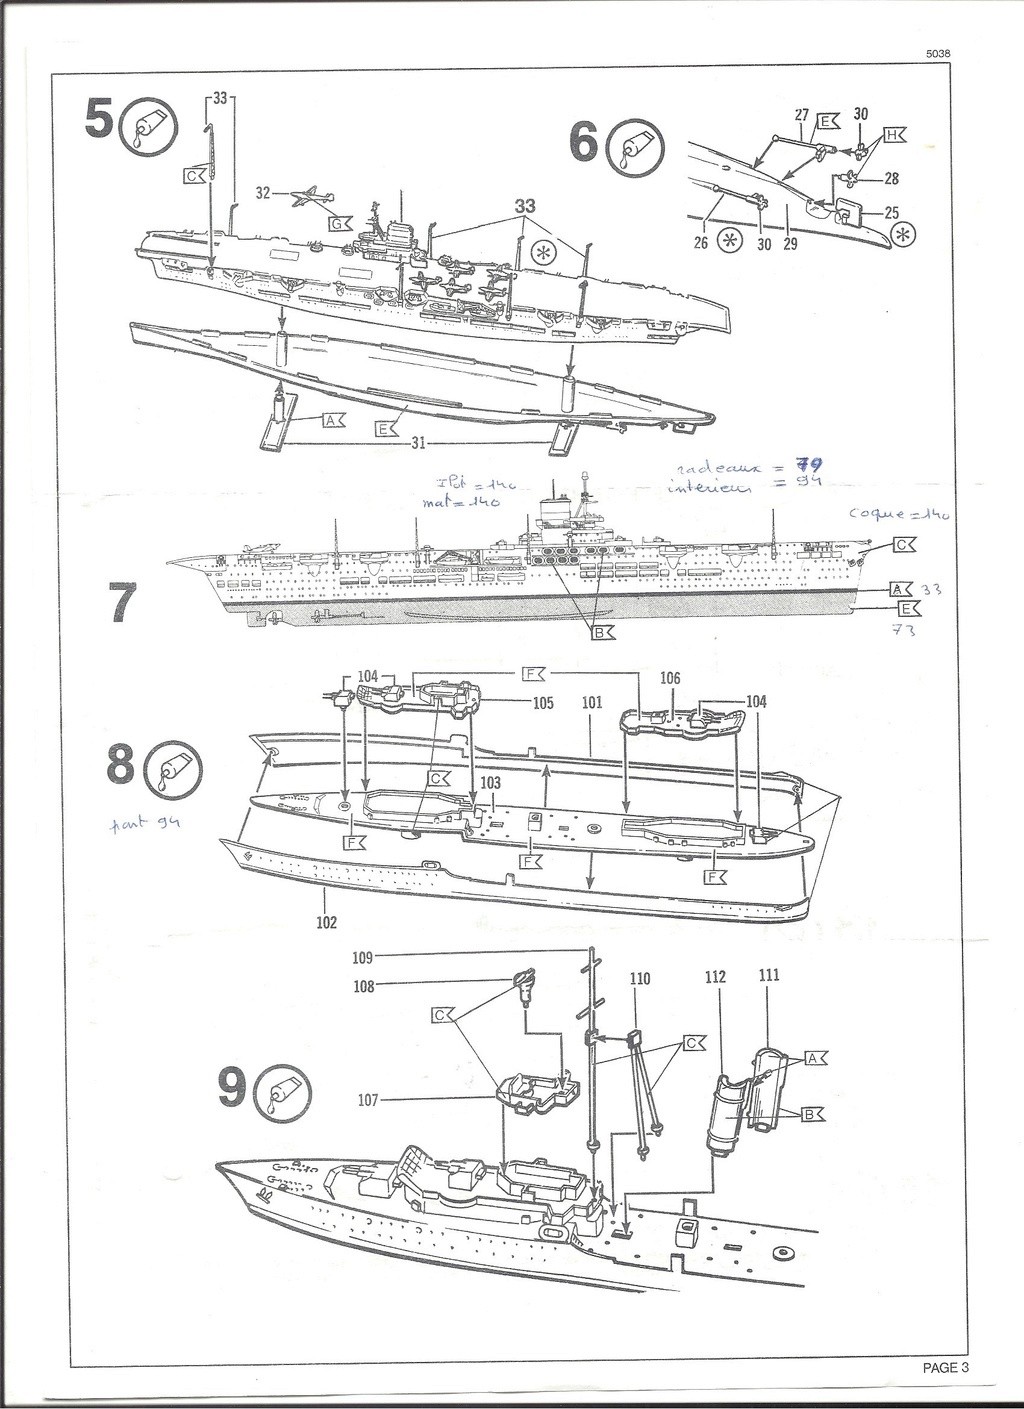 [REVELL] Porte-avions HMS ARK ROYAL & destroyer classe TRIBAL 1/720 Réf 5038 Notice Revell89